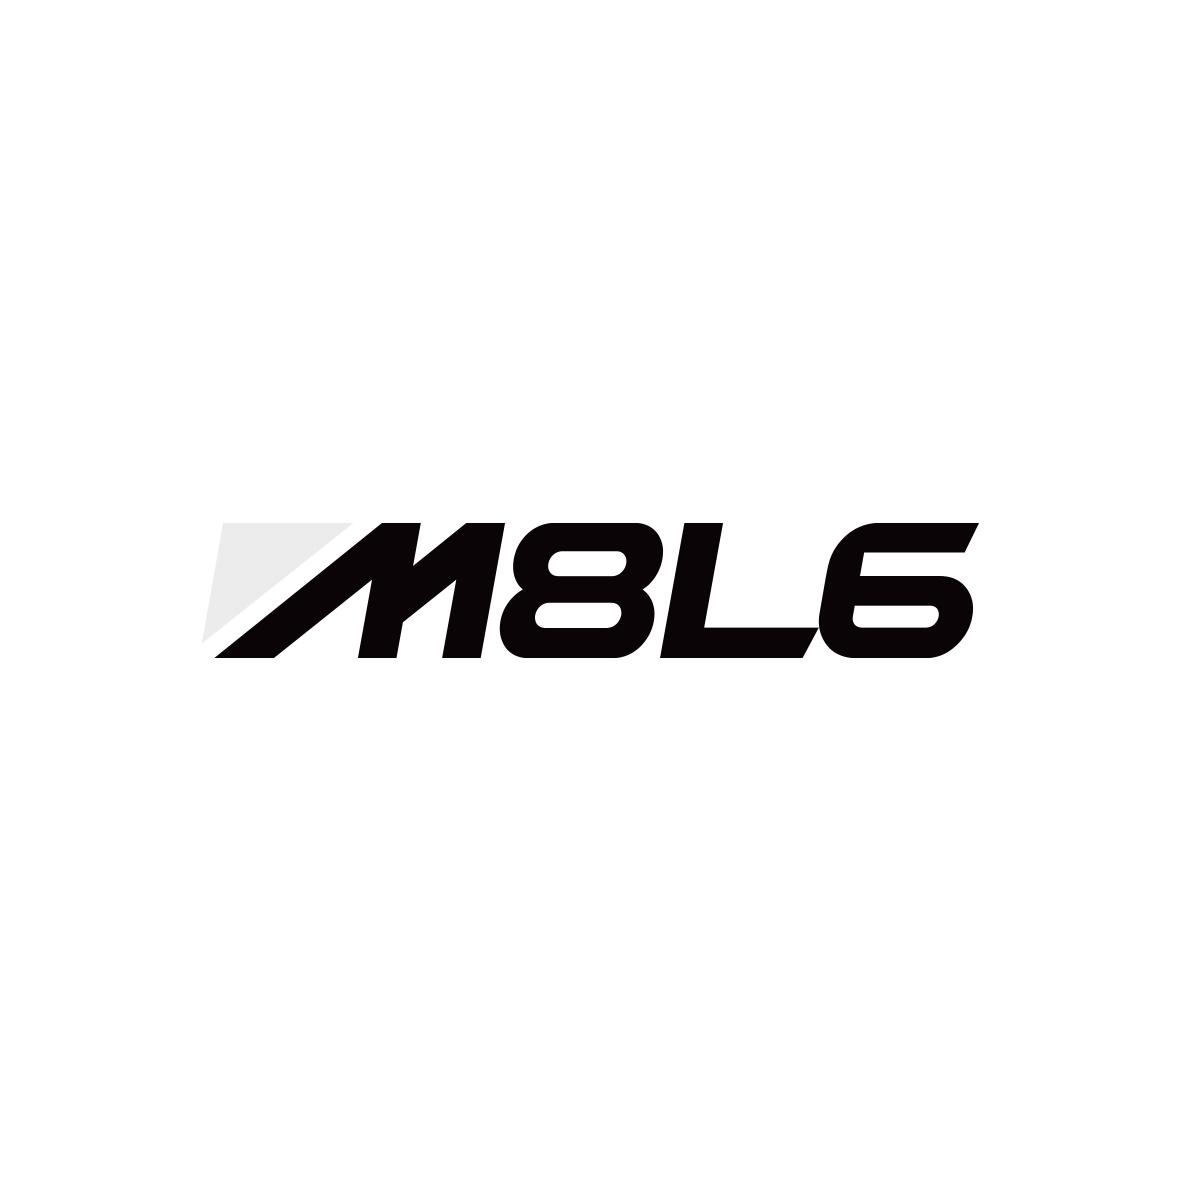 M 8 L 6商标转让